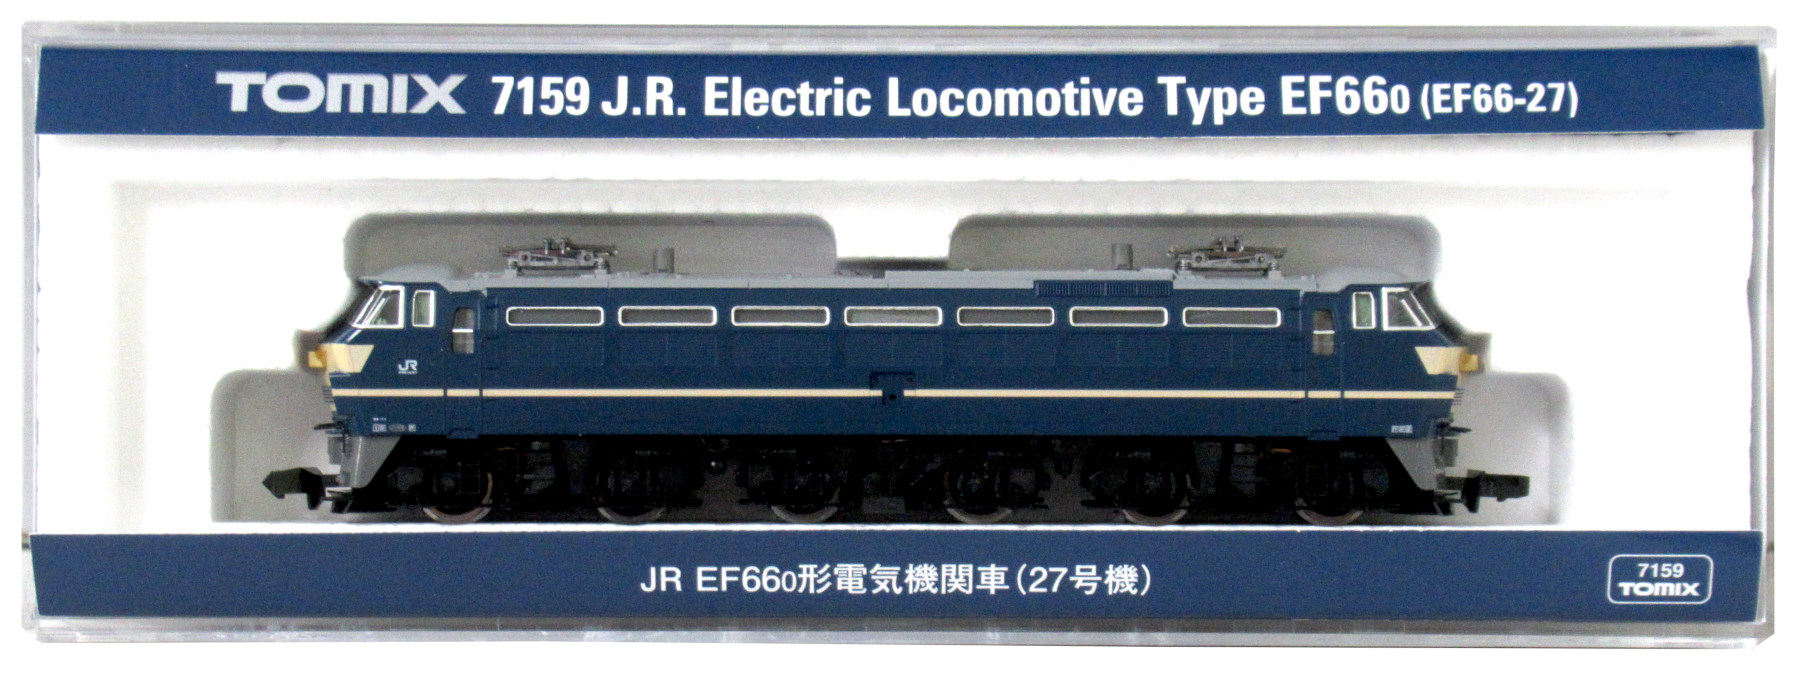 Nゲージ Tomix トミックス 7159 Jr Ef66 0形電気機関車 27号機 新商品